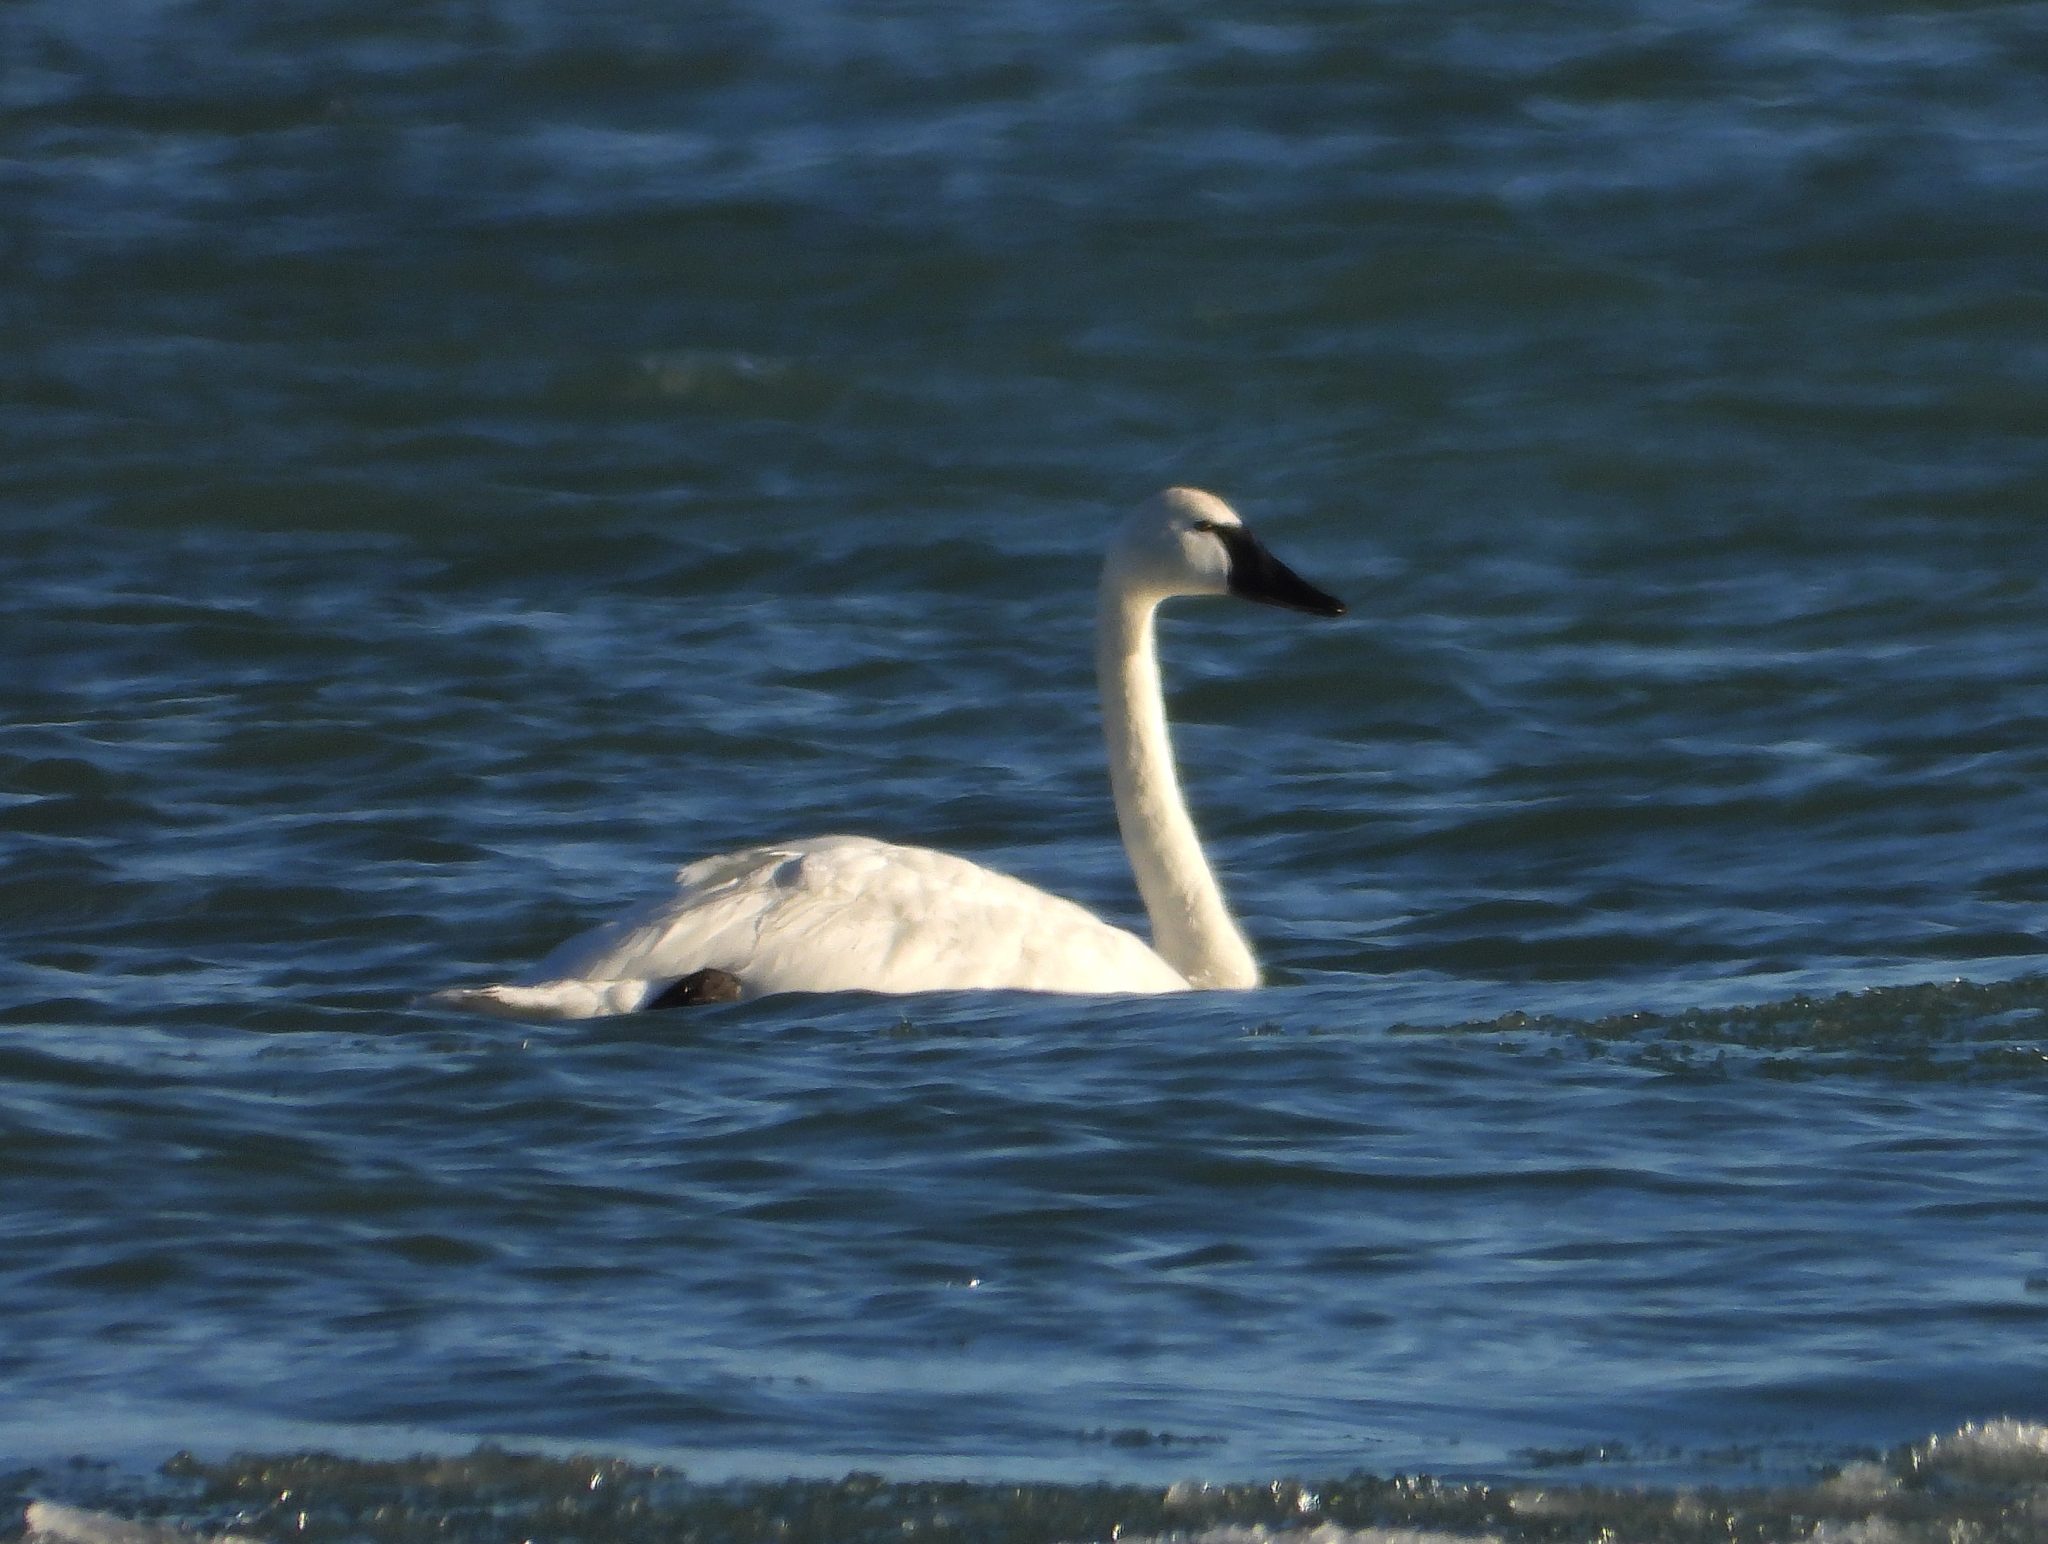 Tundra or Trumpeter Swan Near Oscoda? – You Decide